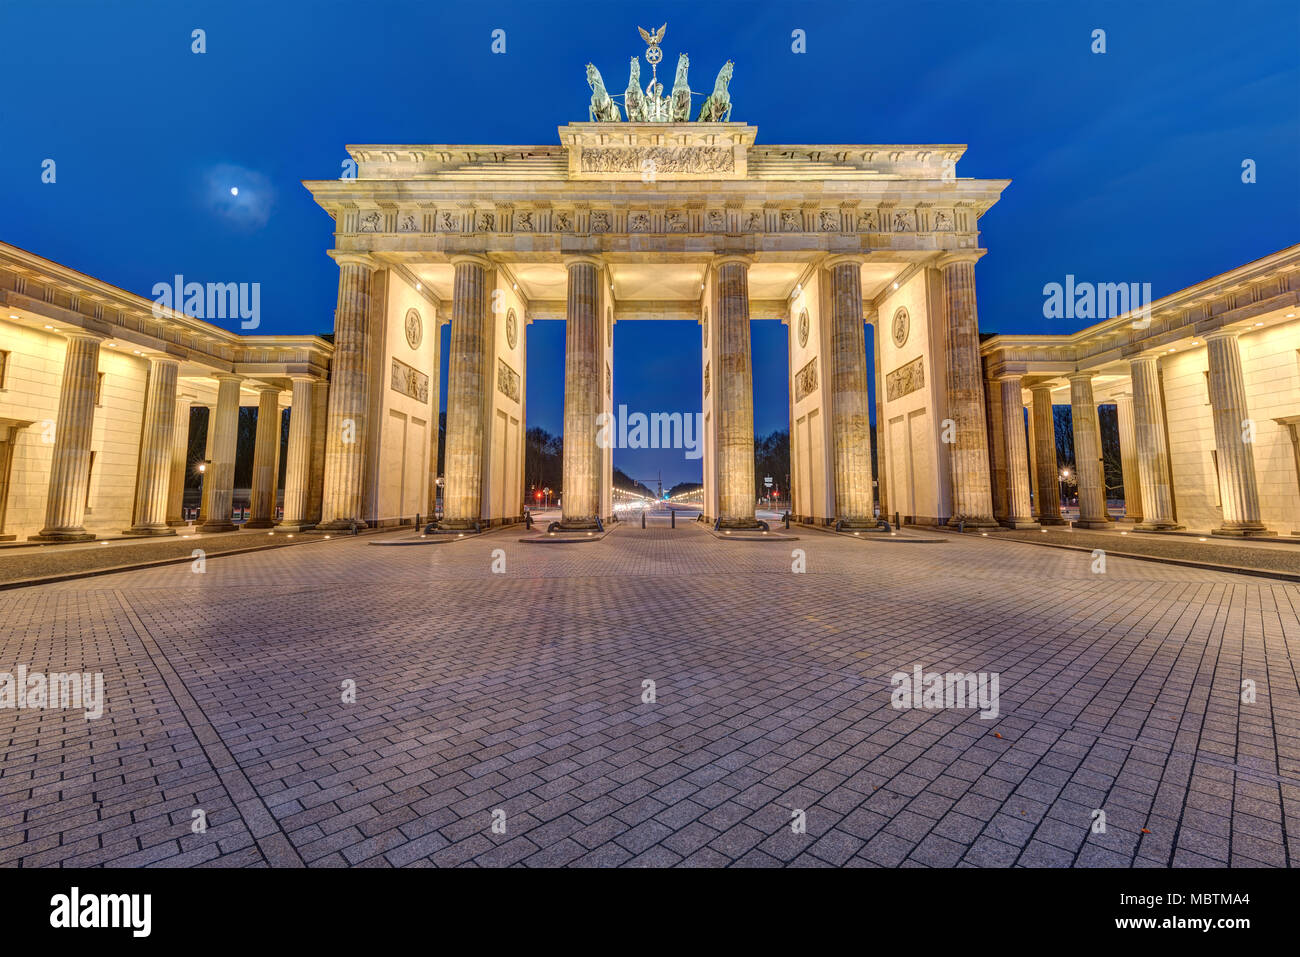 The famous illuminated Brandenburg Gate in Berlin, Germany, at night Stock Photo